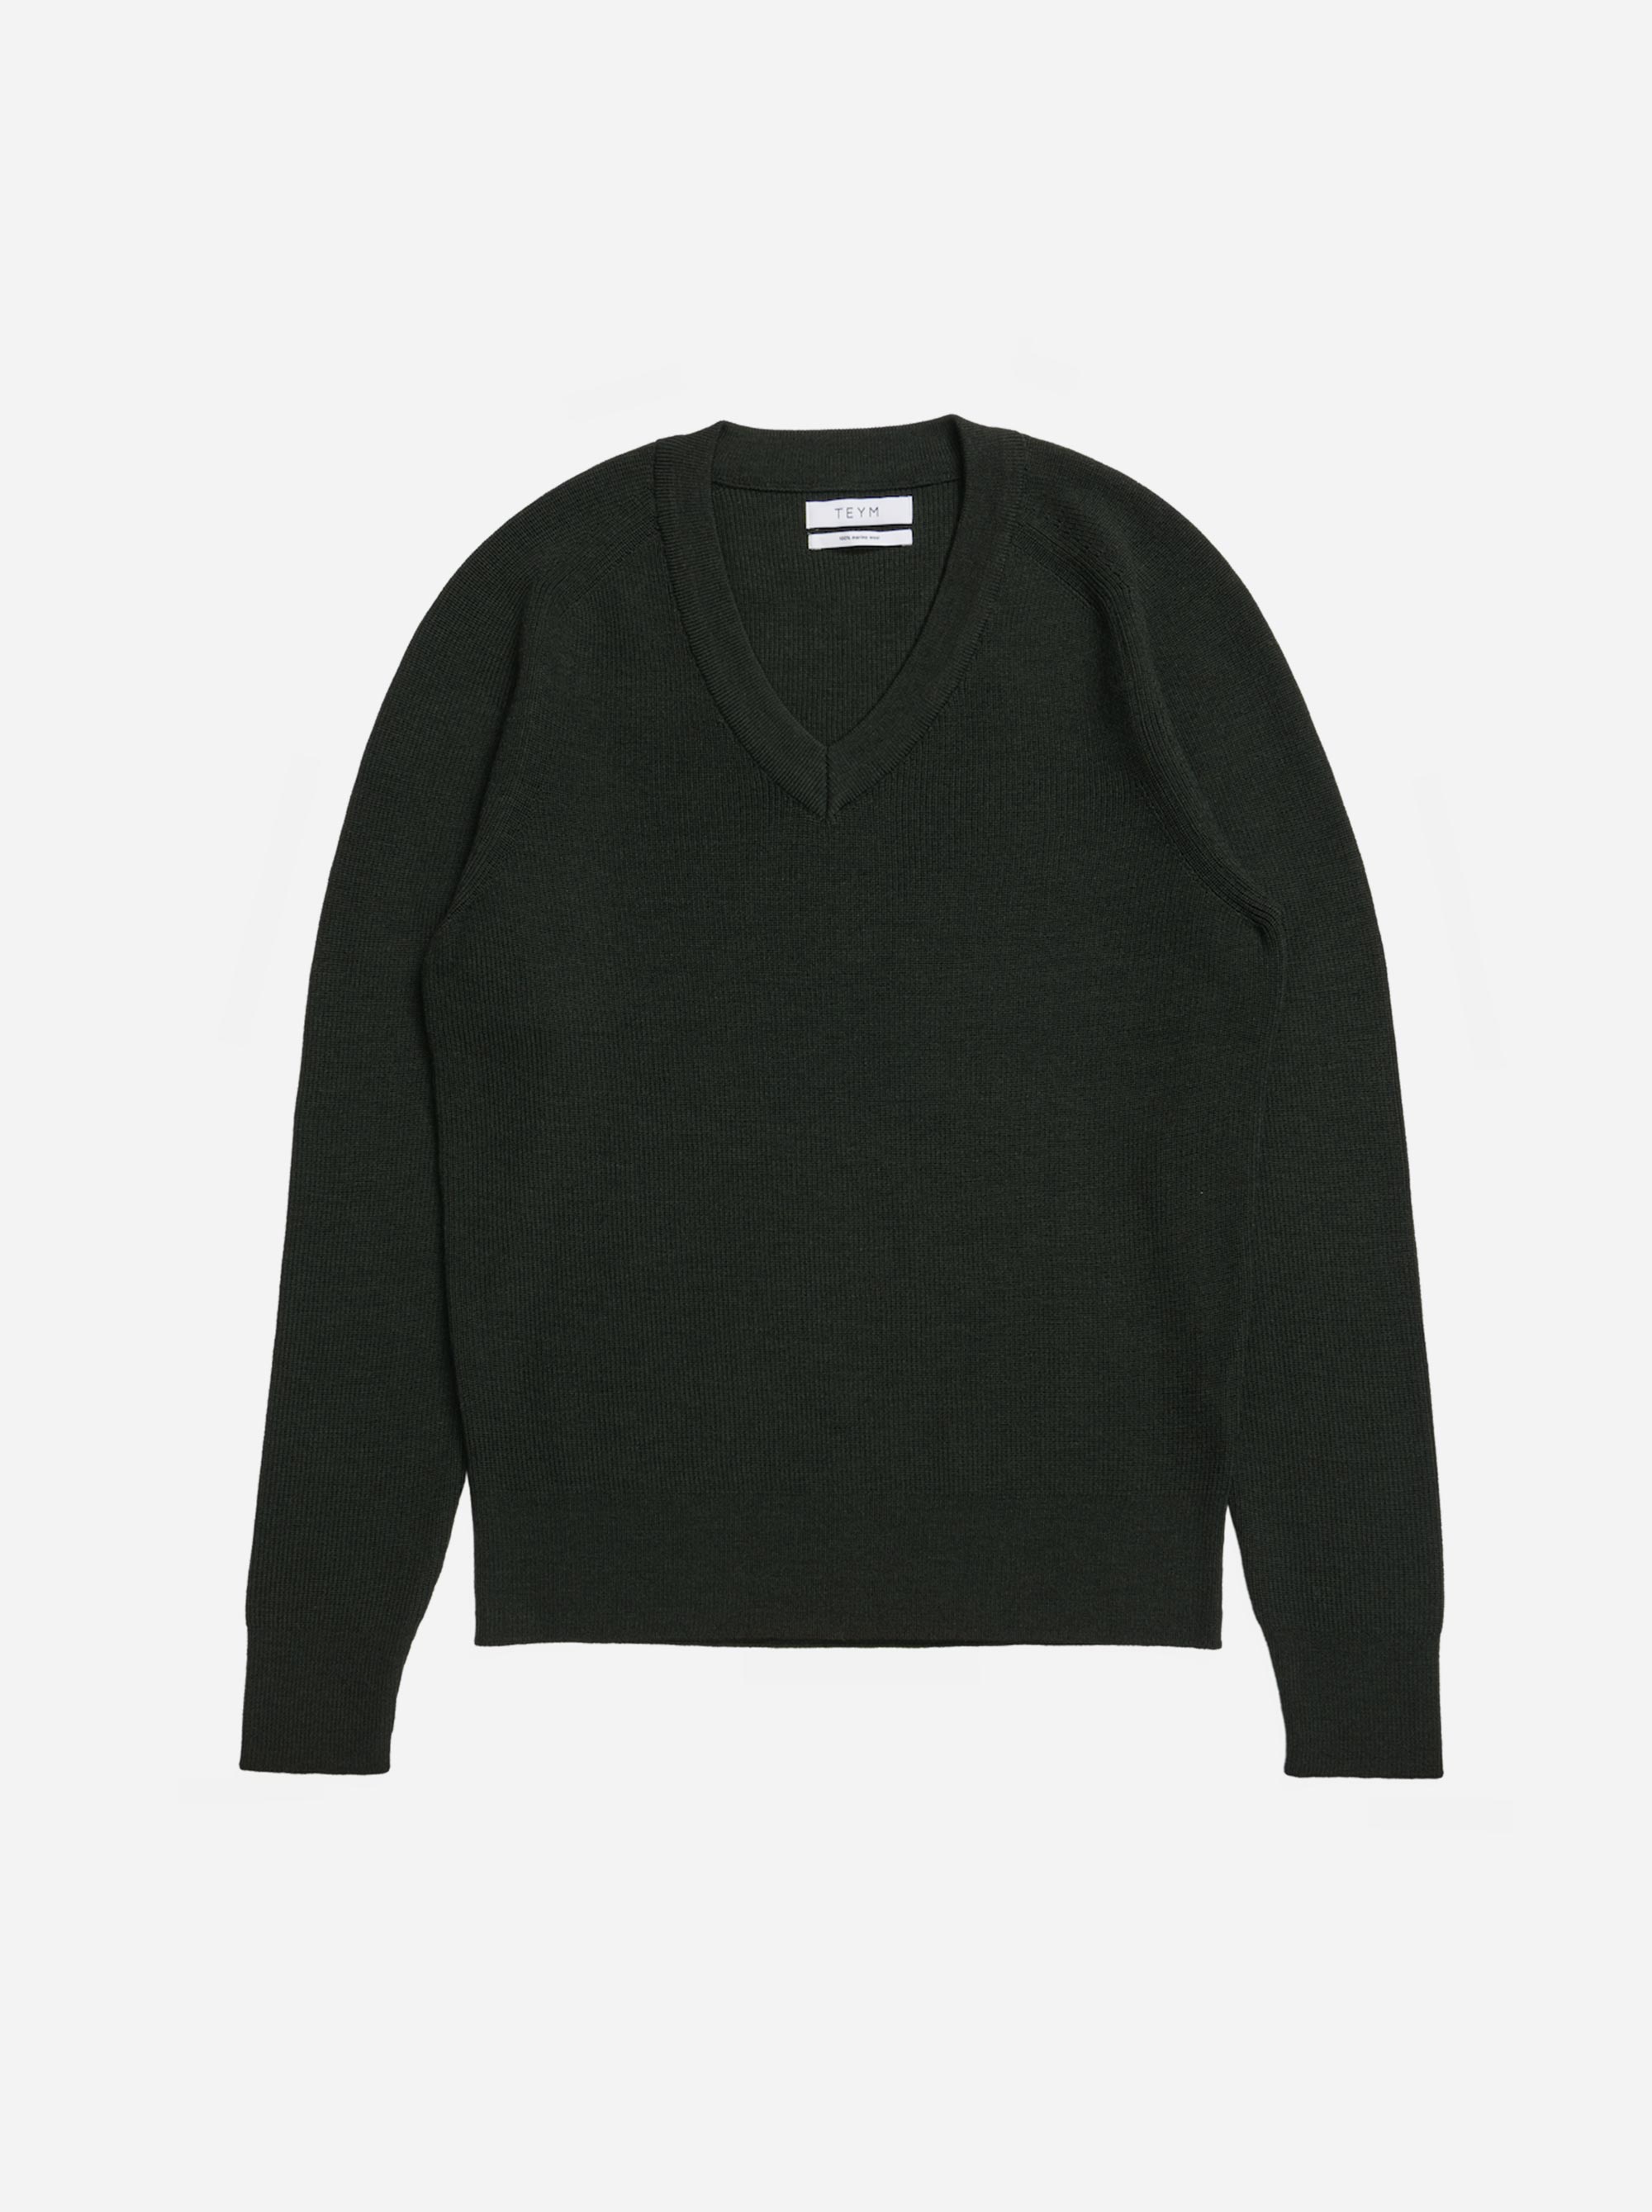 Teym - V-Neck - The Merino Sweater - Women - Green - 4